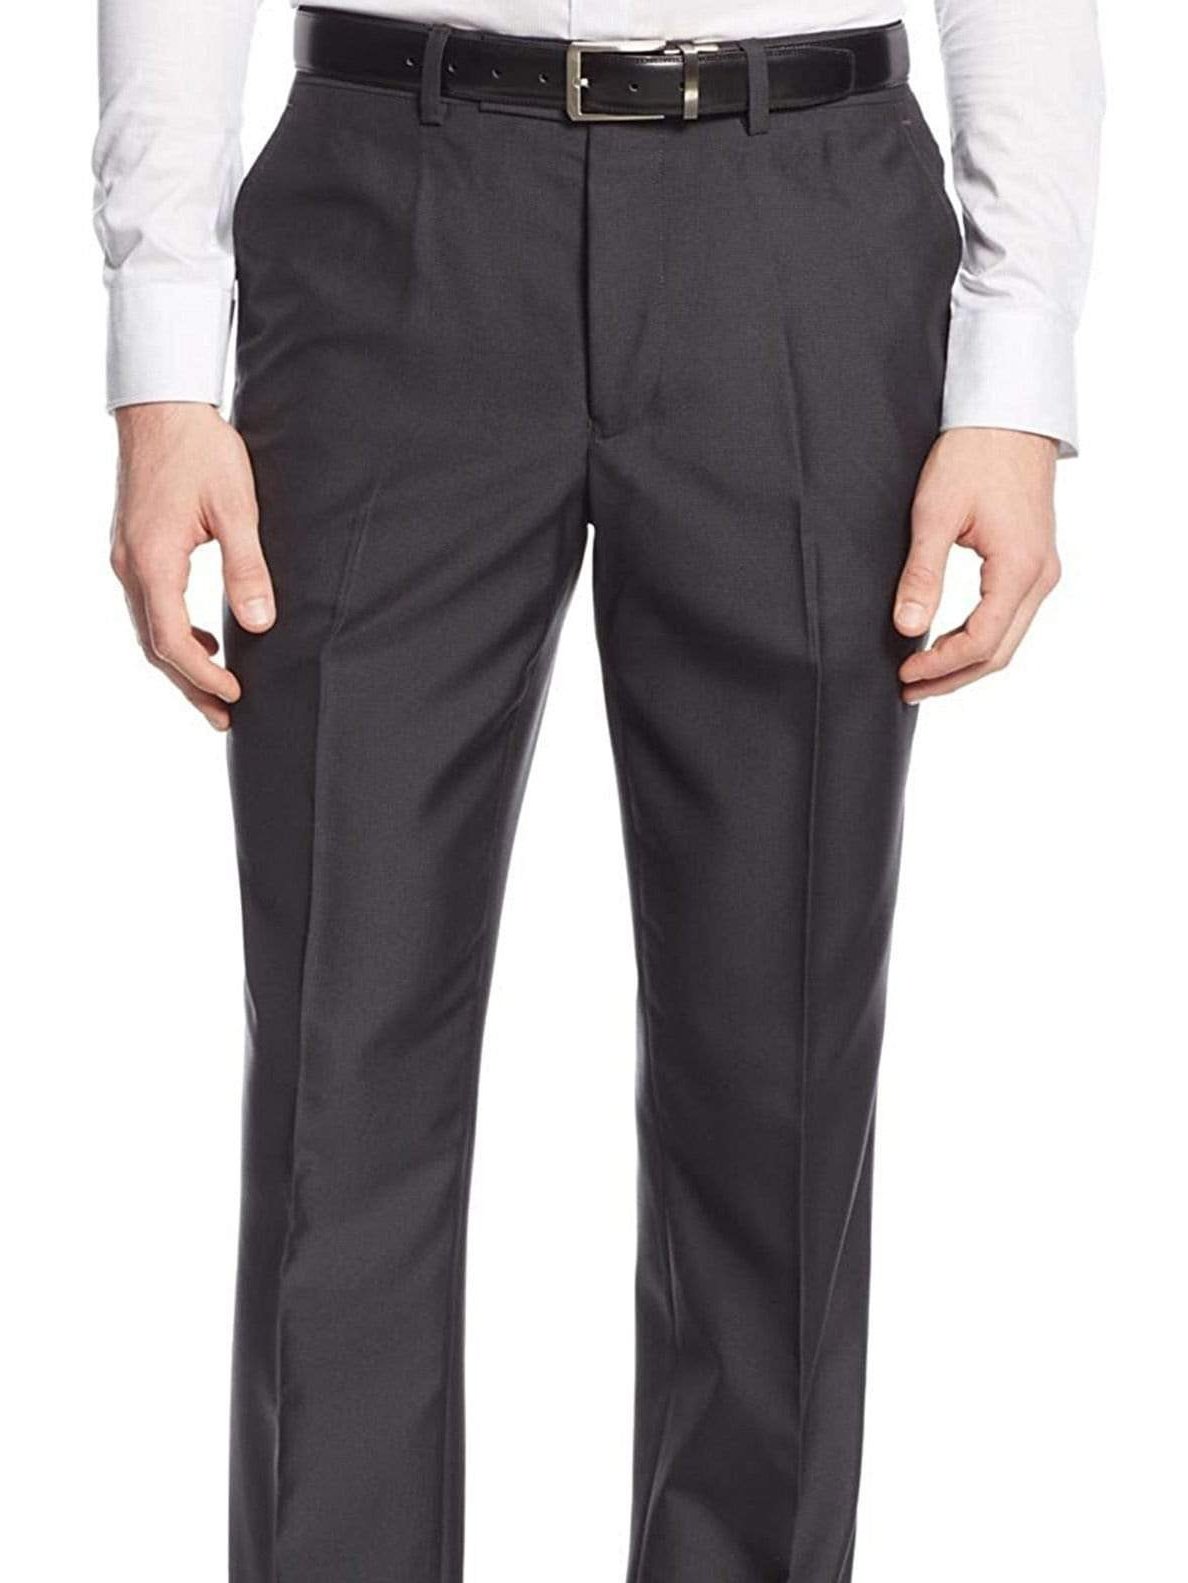 Nautica Regular Fit Black Mini Check Flat Front Dress Pants - The Suit Depot